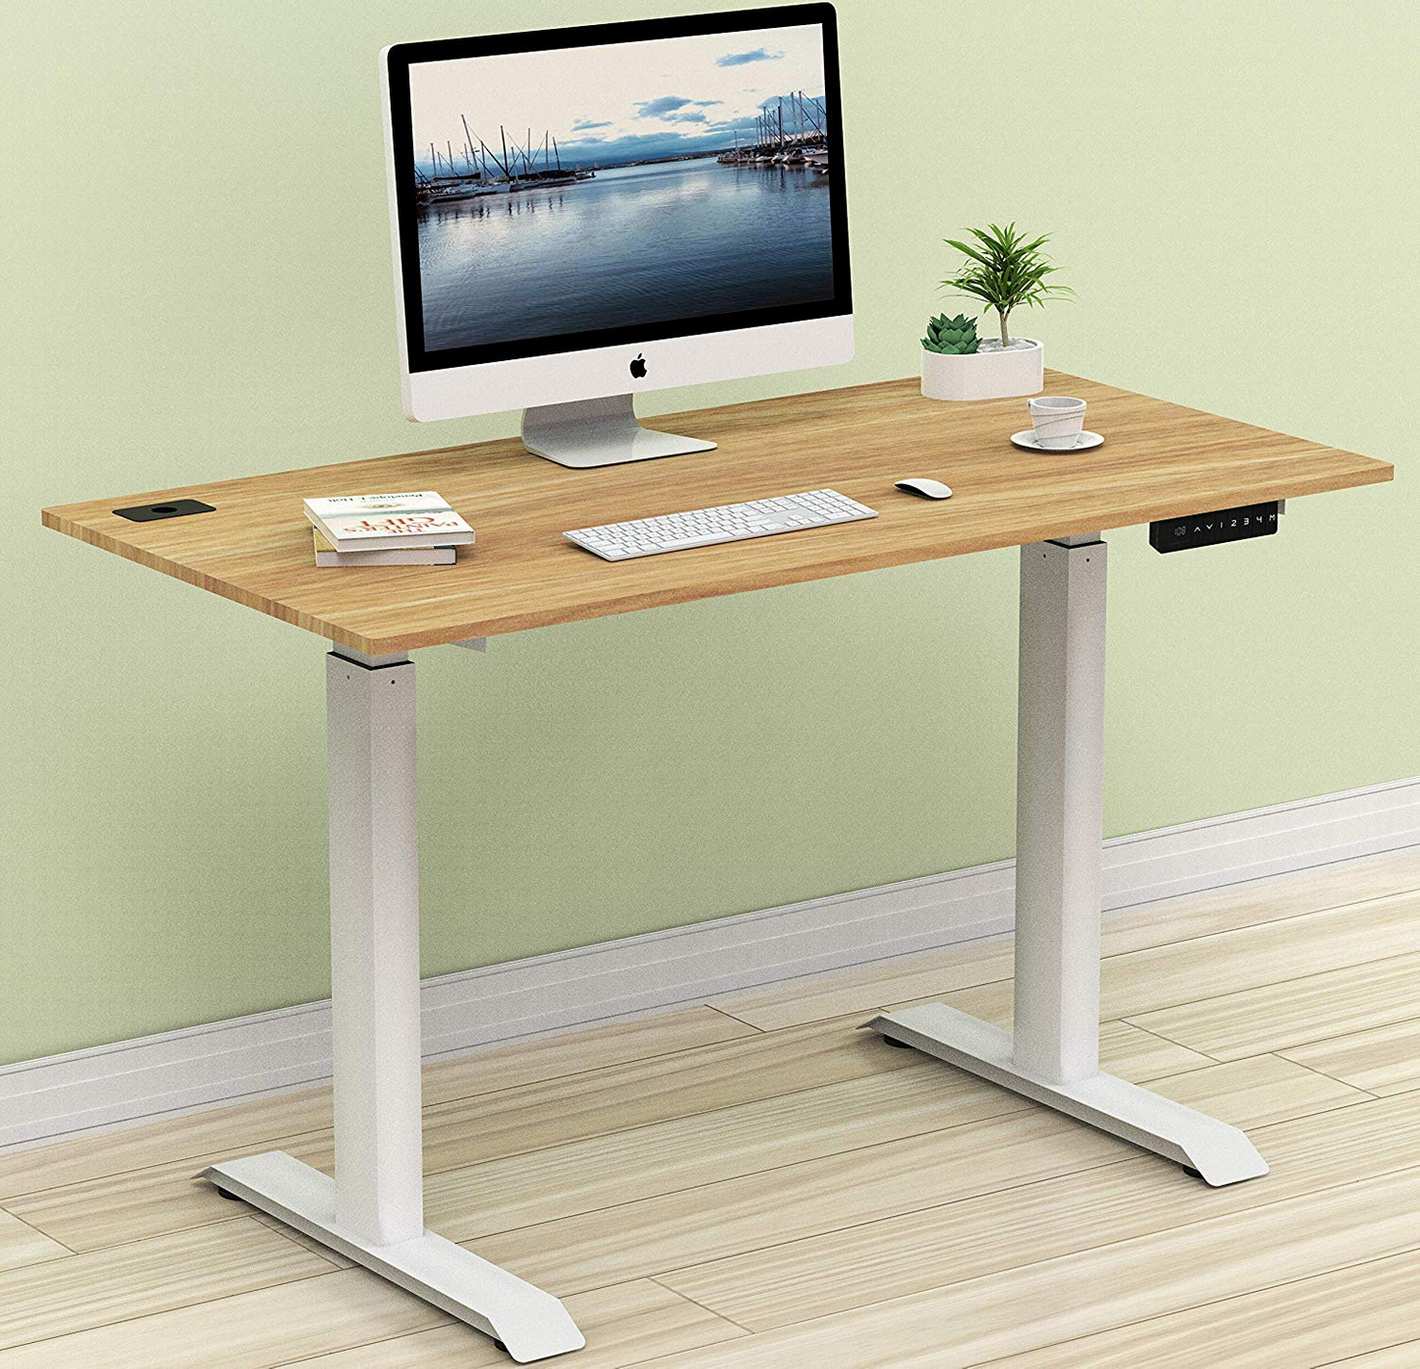 Ideia Decorar Mesa do computador limpa - Conheça o suporte de mesa para monitores mesa de computador limpa